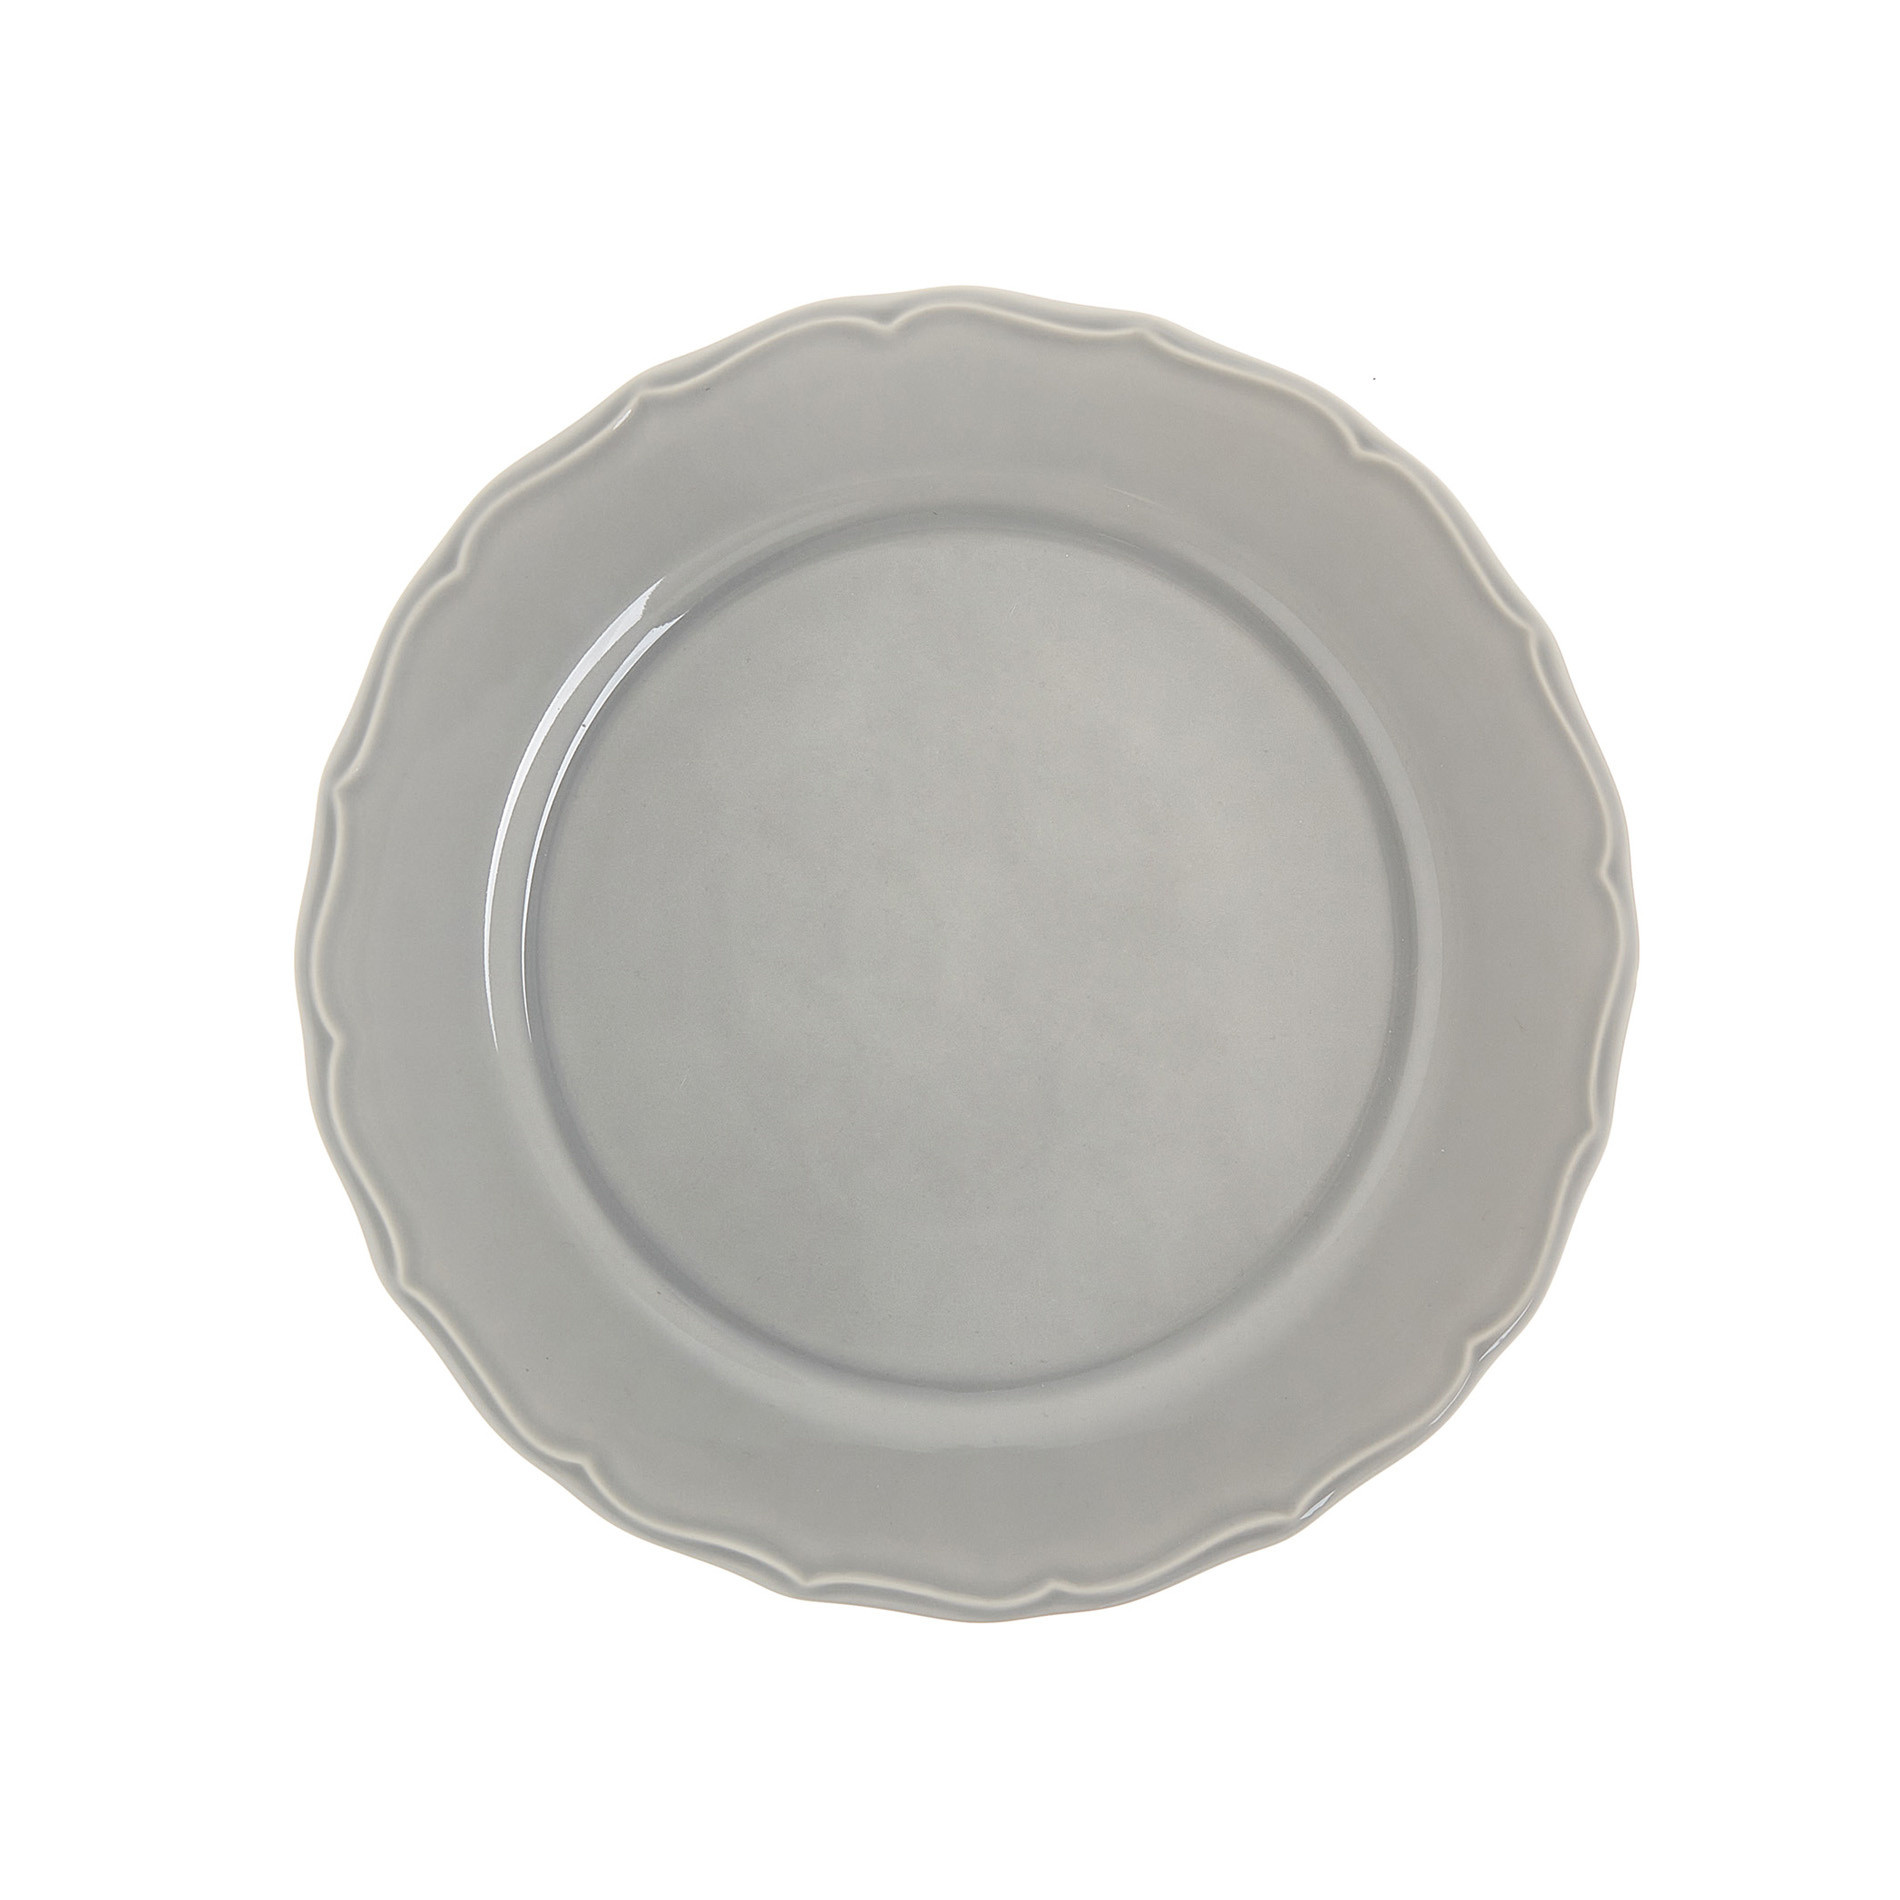 Dona Maria ceramic plate, Grey, large image number 0